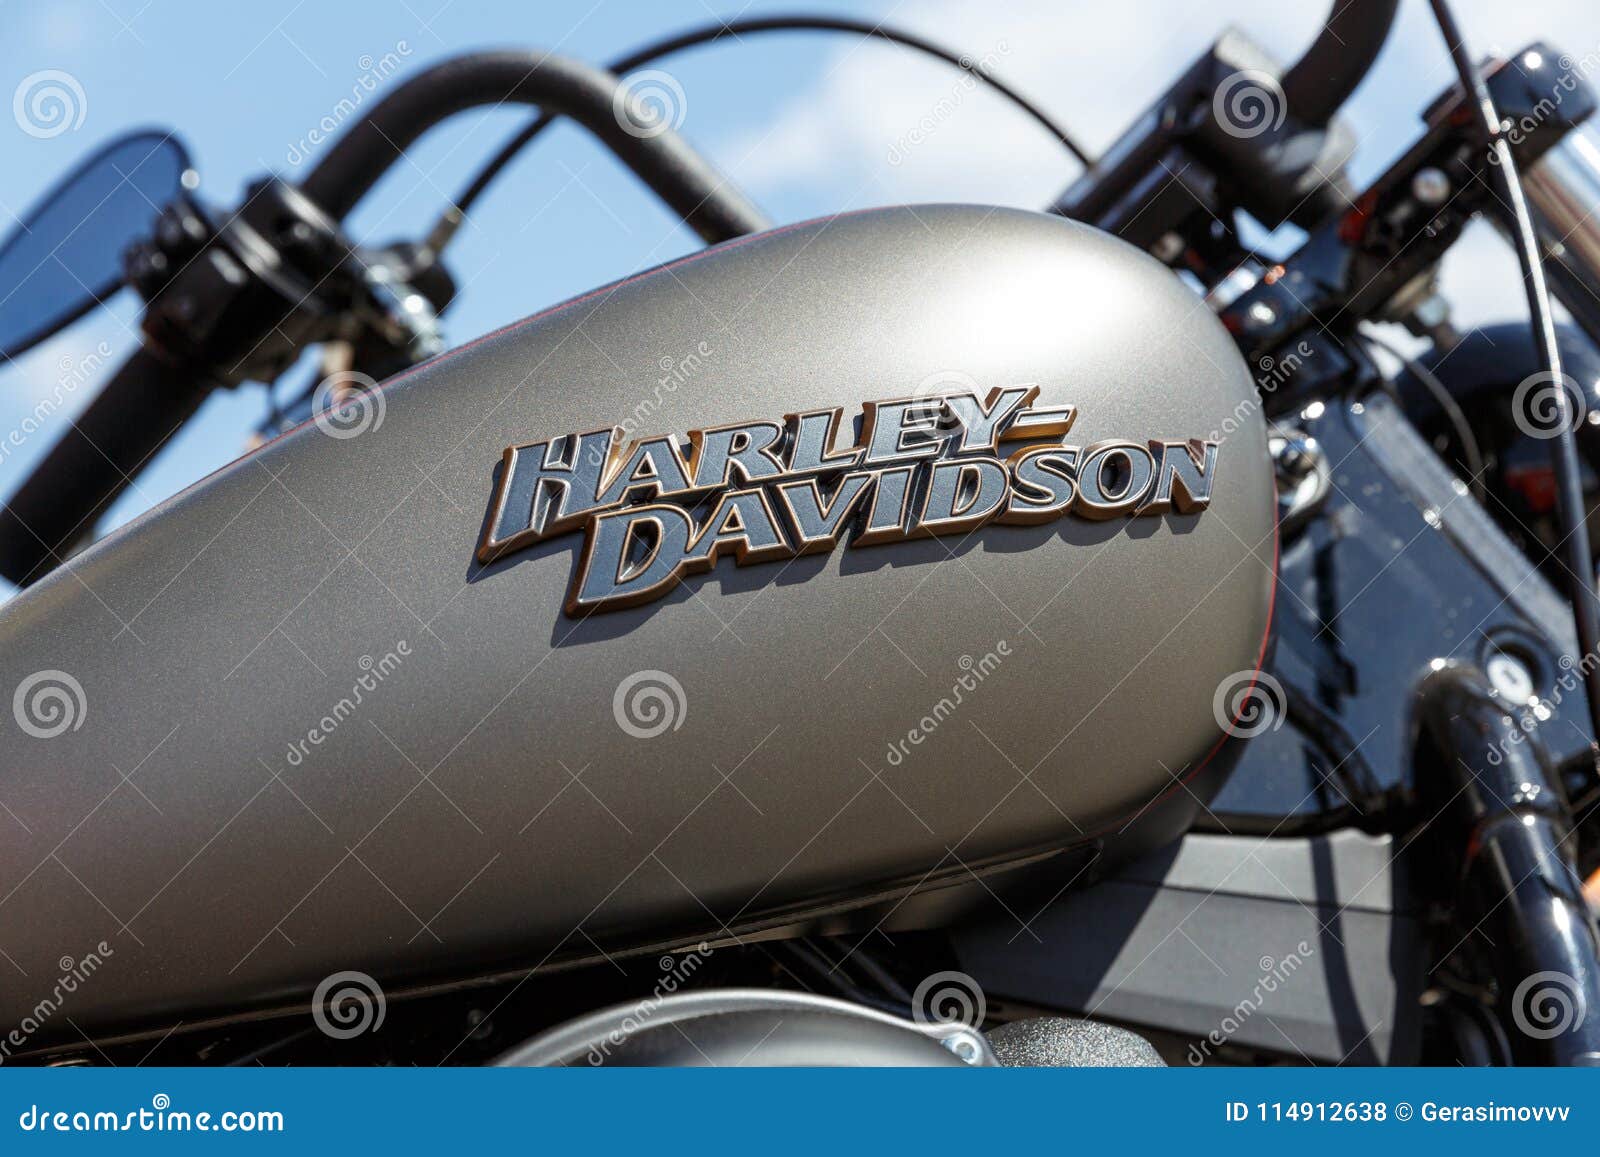 Logo Of Harley Davidson Motorcycles On A Fuel Tank Editorial Stock Photo Image Of Emblem Logo 114912638